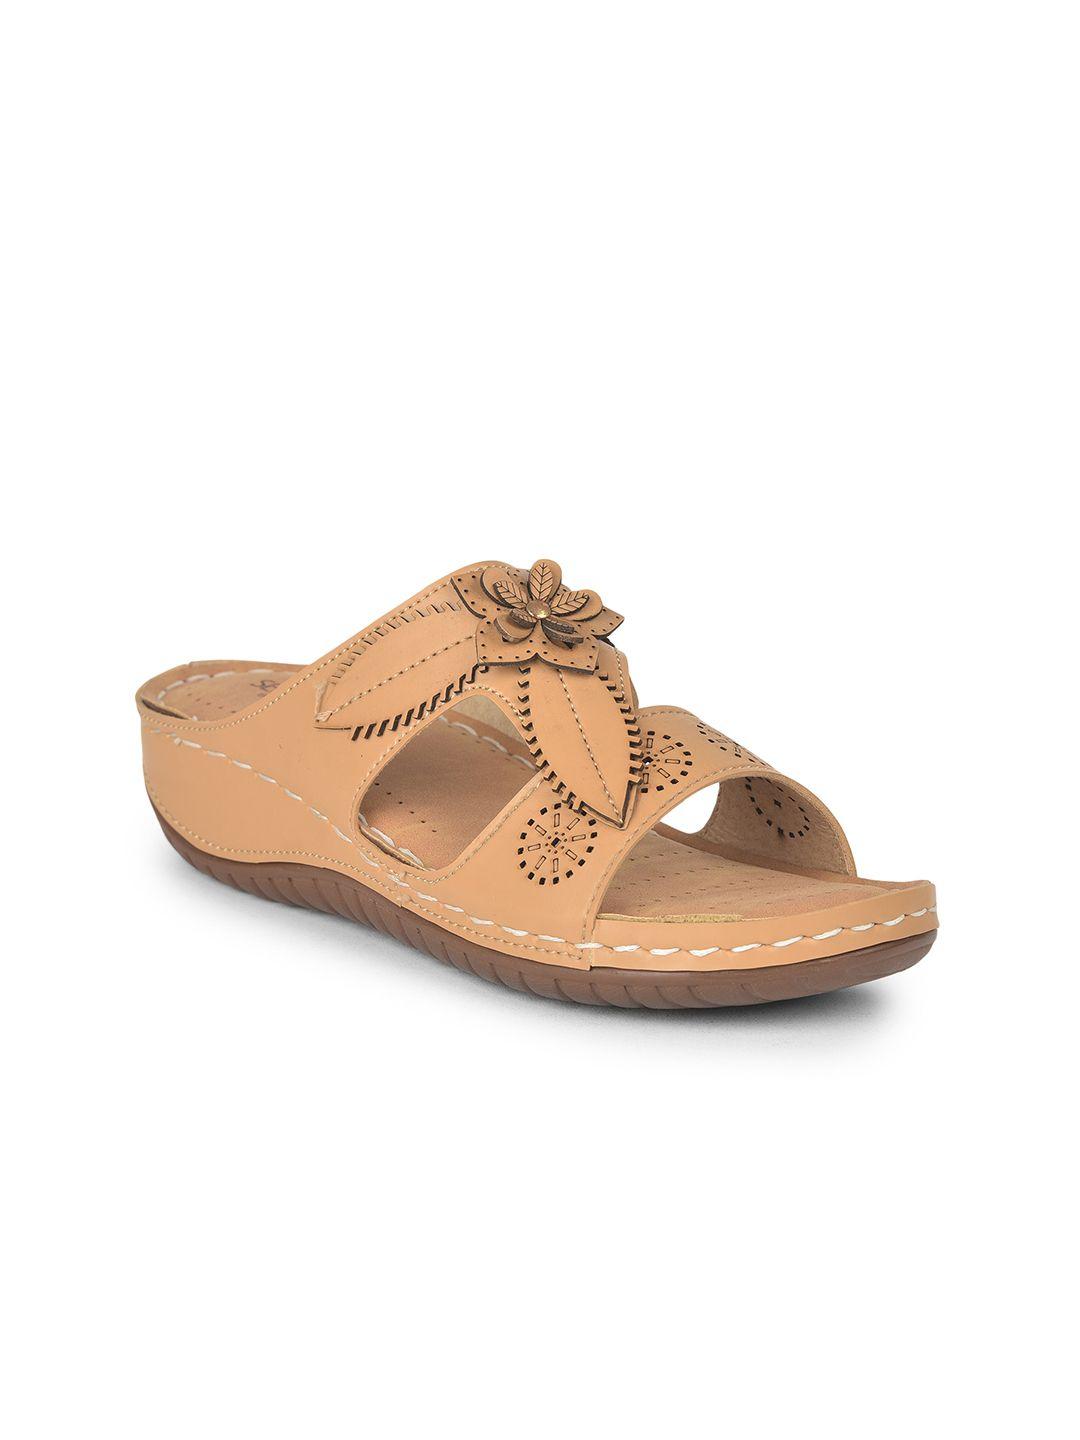 liberty-beige-platform-sandals